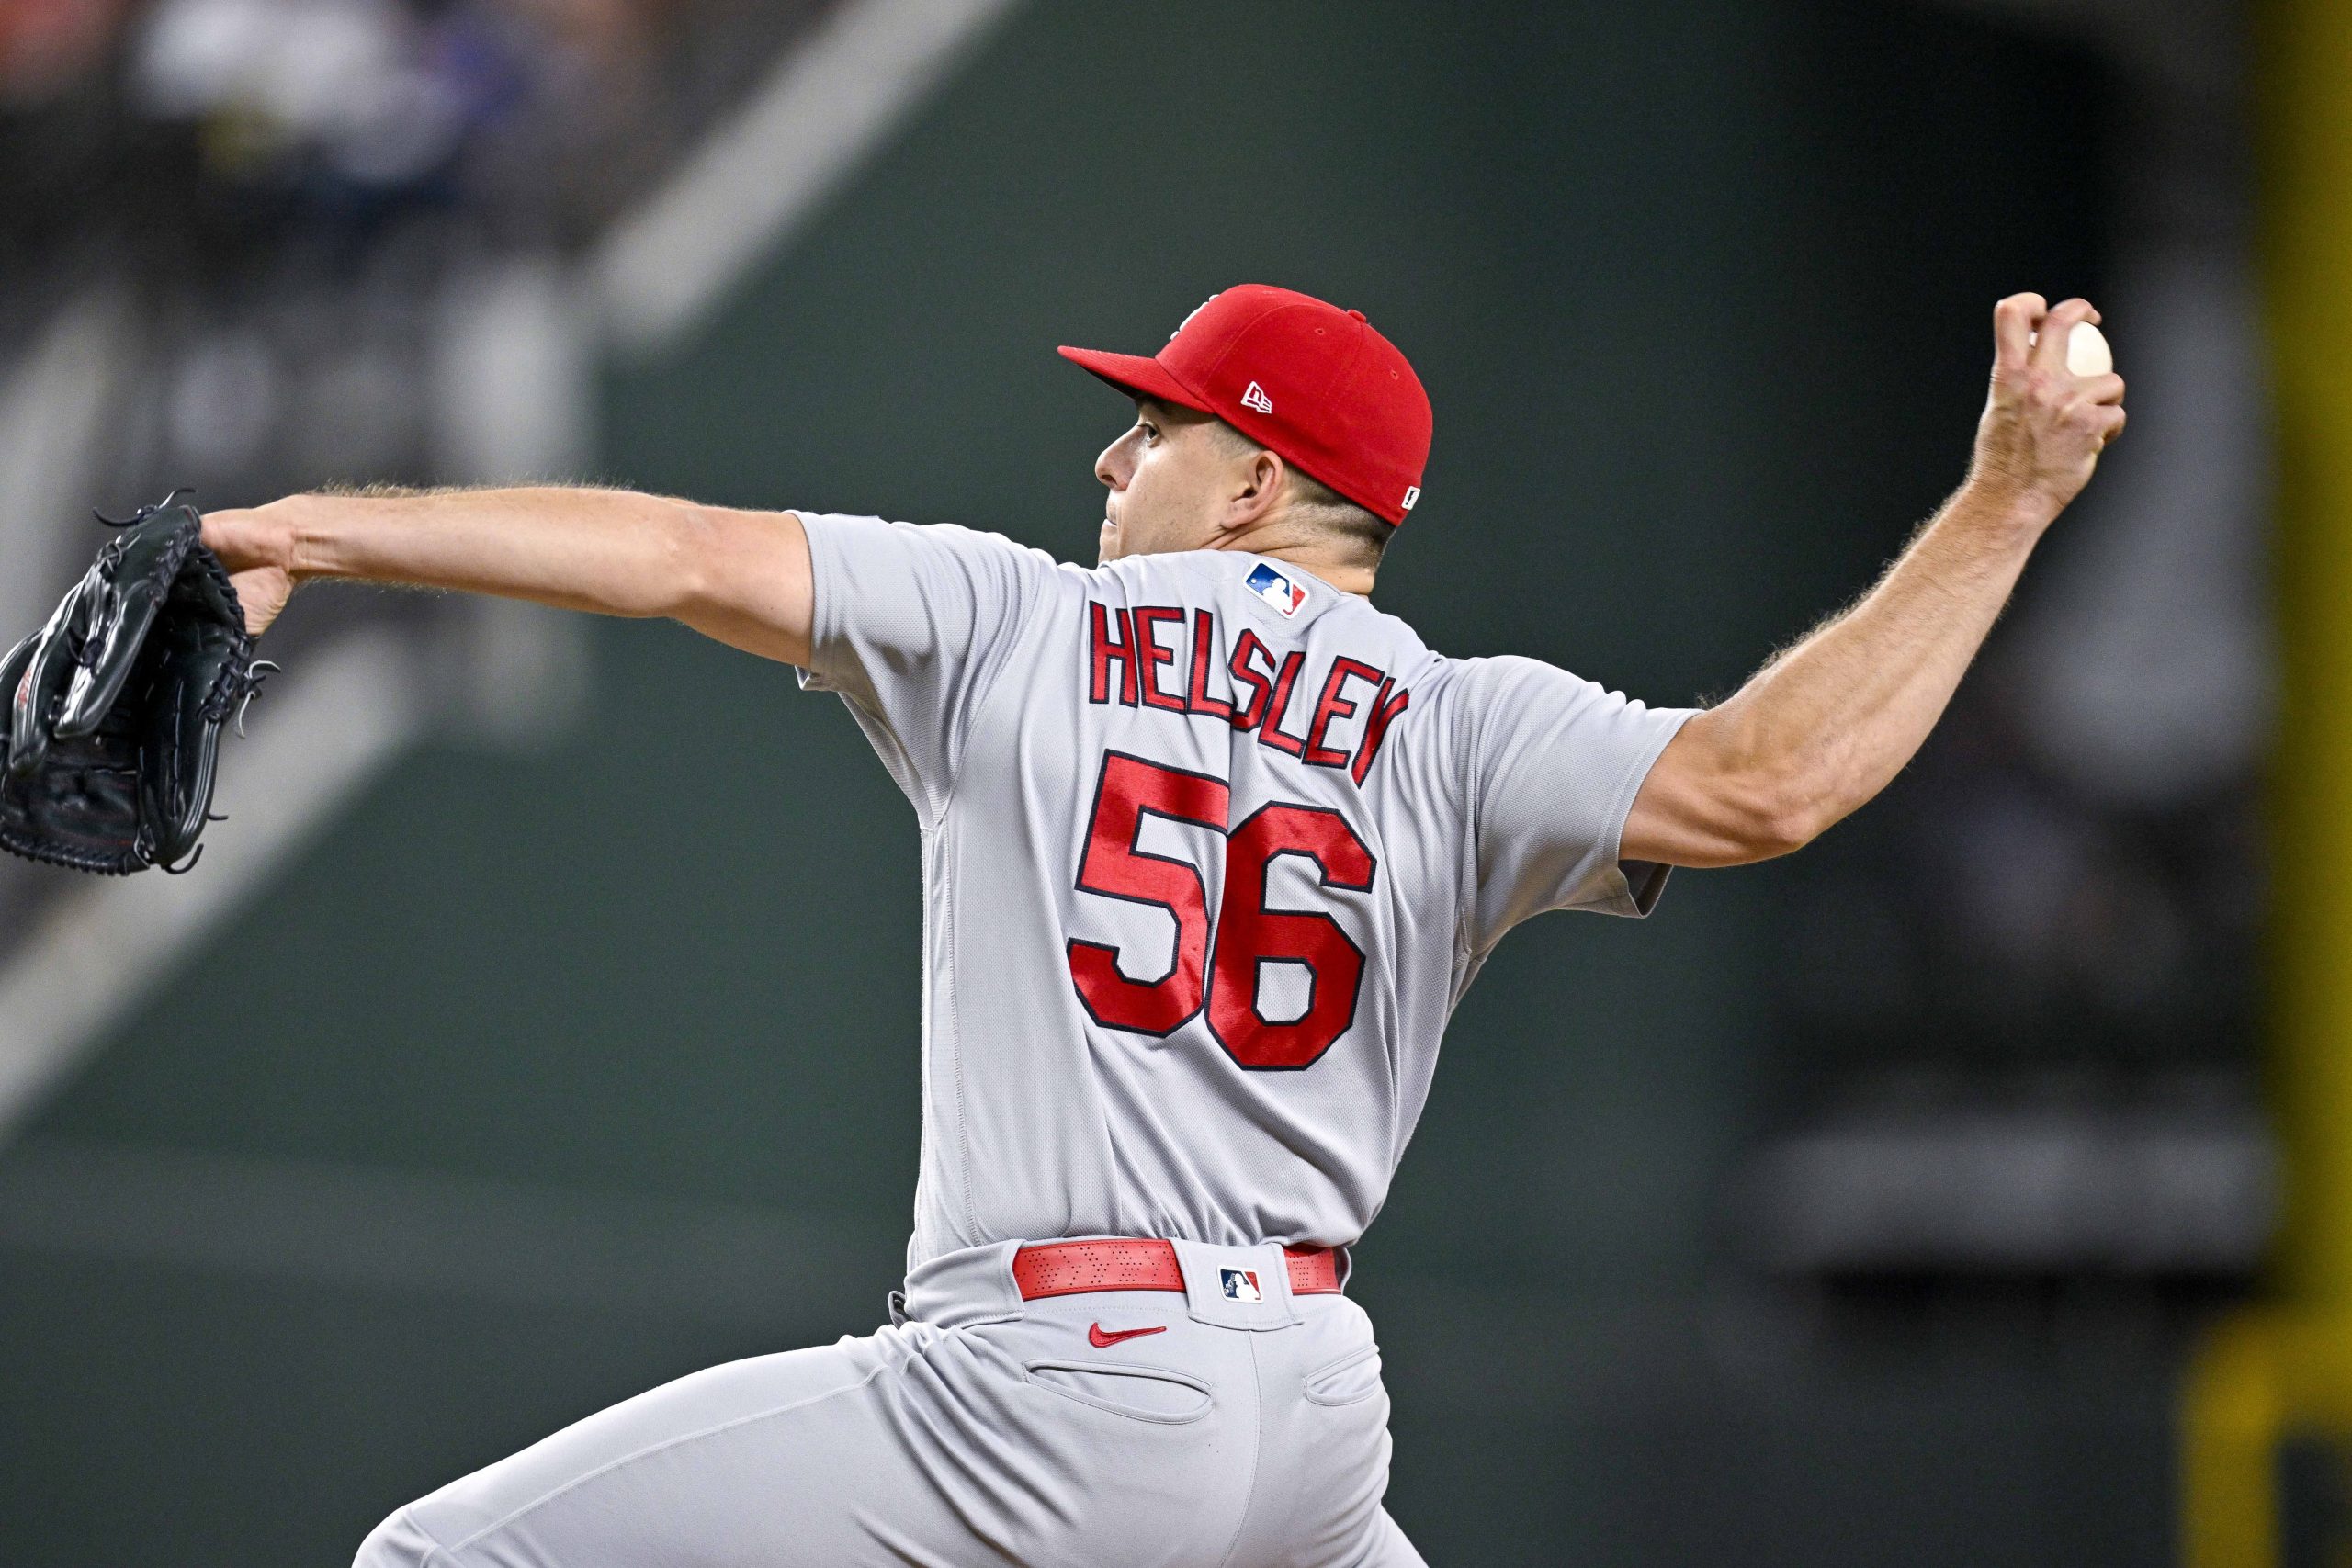 Ryan Helsley has thrown an immaculate inning! : r/baseball